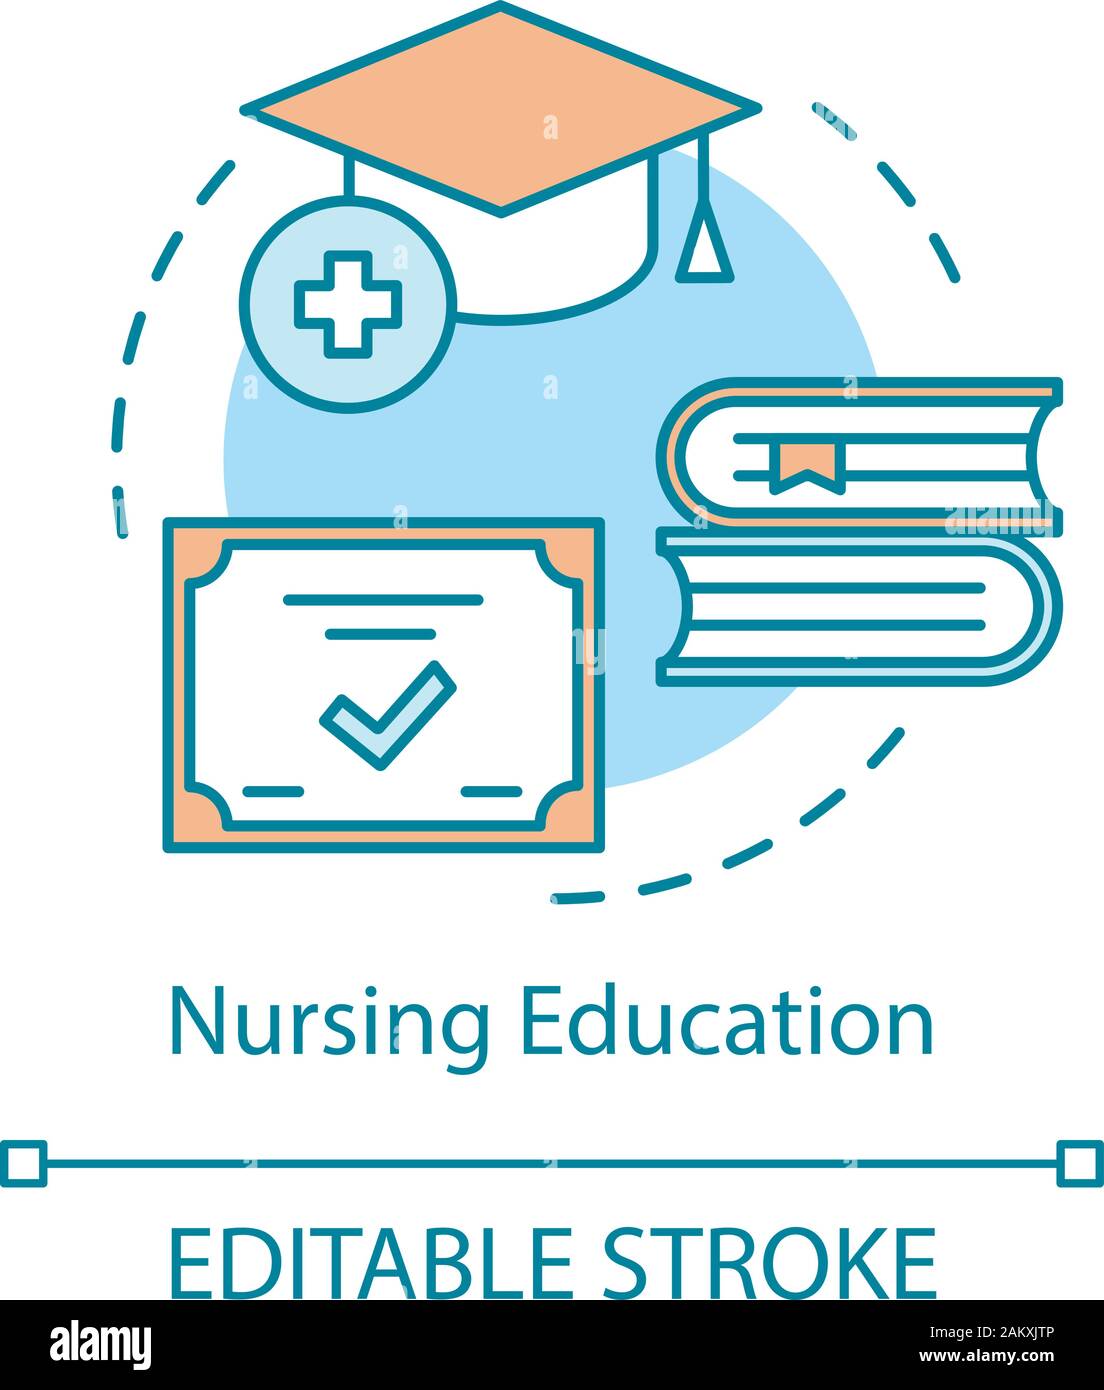 Nurse education concept icon. Medical qualification idea thin line